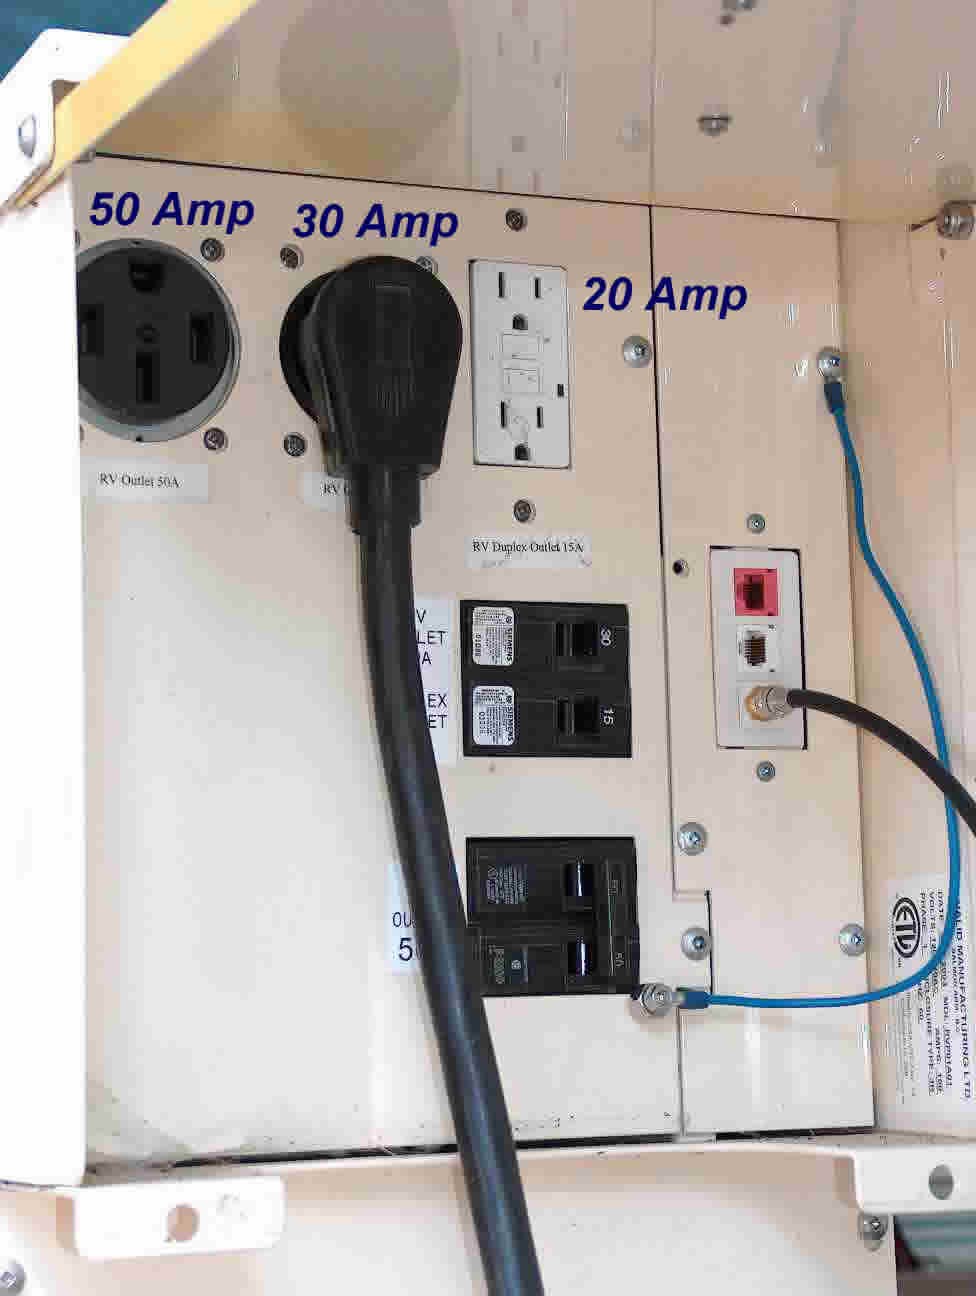 Amusing 30 Amp Rv Wiring Diagram 46 About Remodel Two Way Switch Wiring Diagram with 30 Amp Rv Wiring Diagram